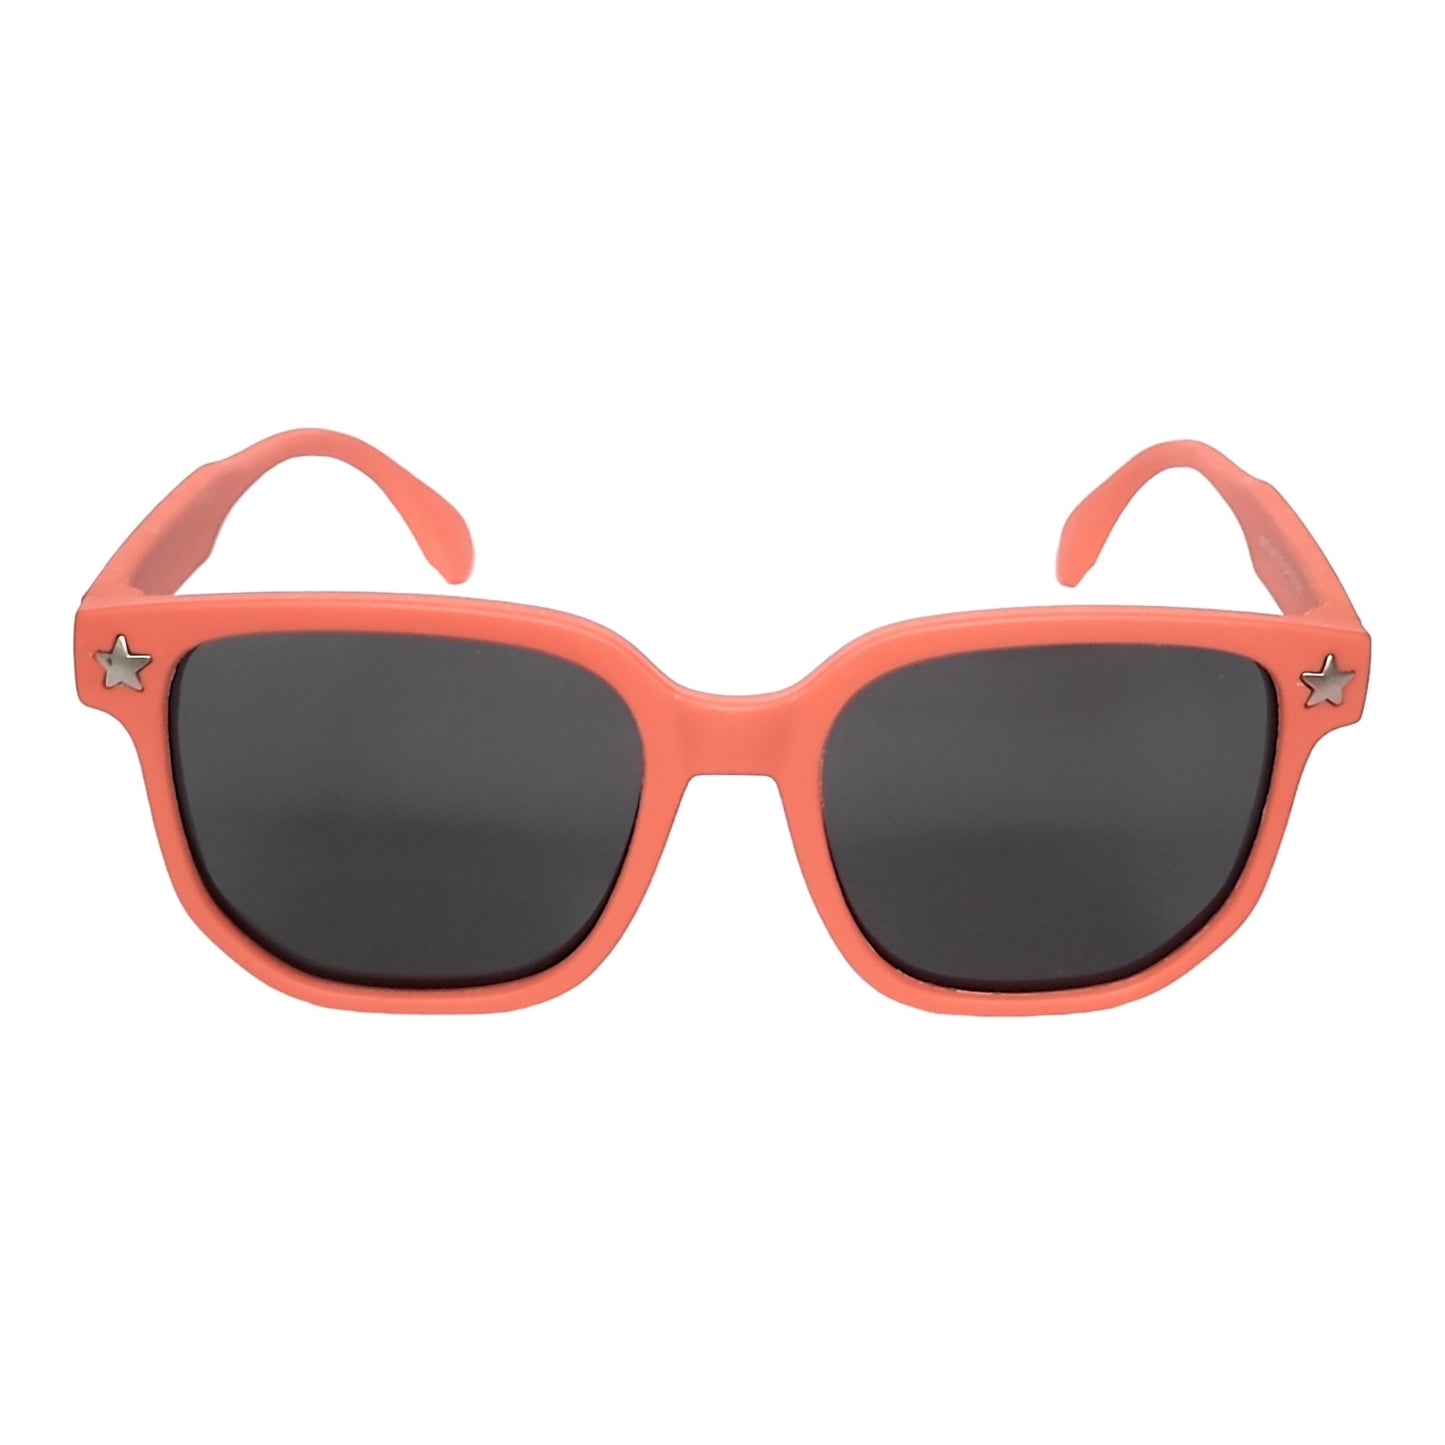 Wayfarer Kids Polarized Sunglasses for Children Age 4-9 Years Old, Girl or Boy  | affaires-9010 - Orange